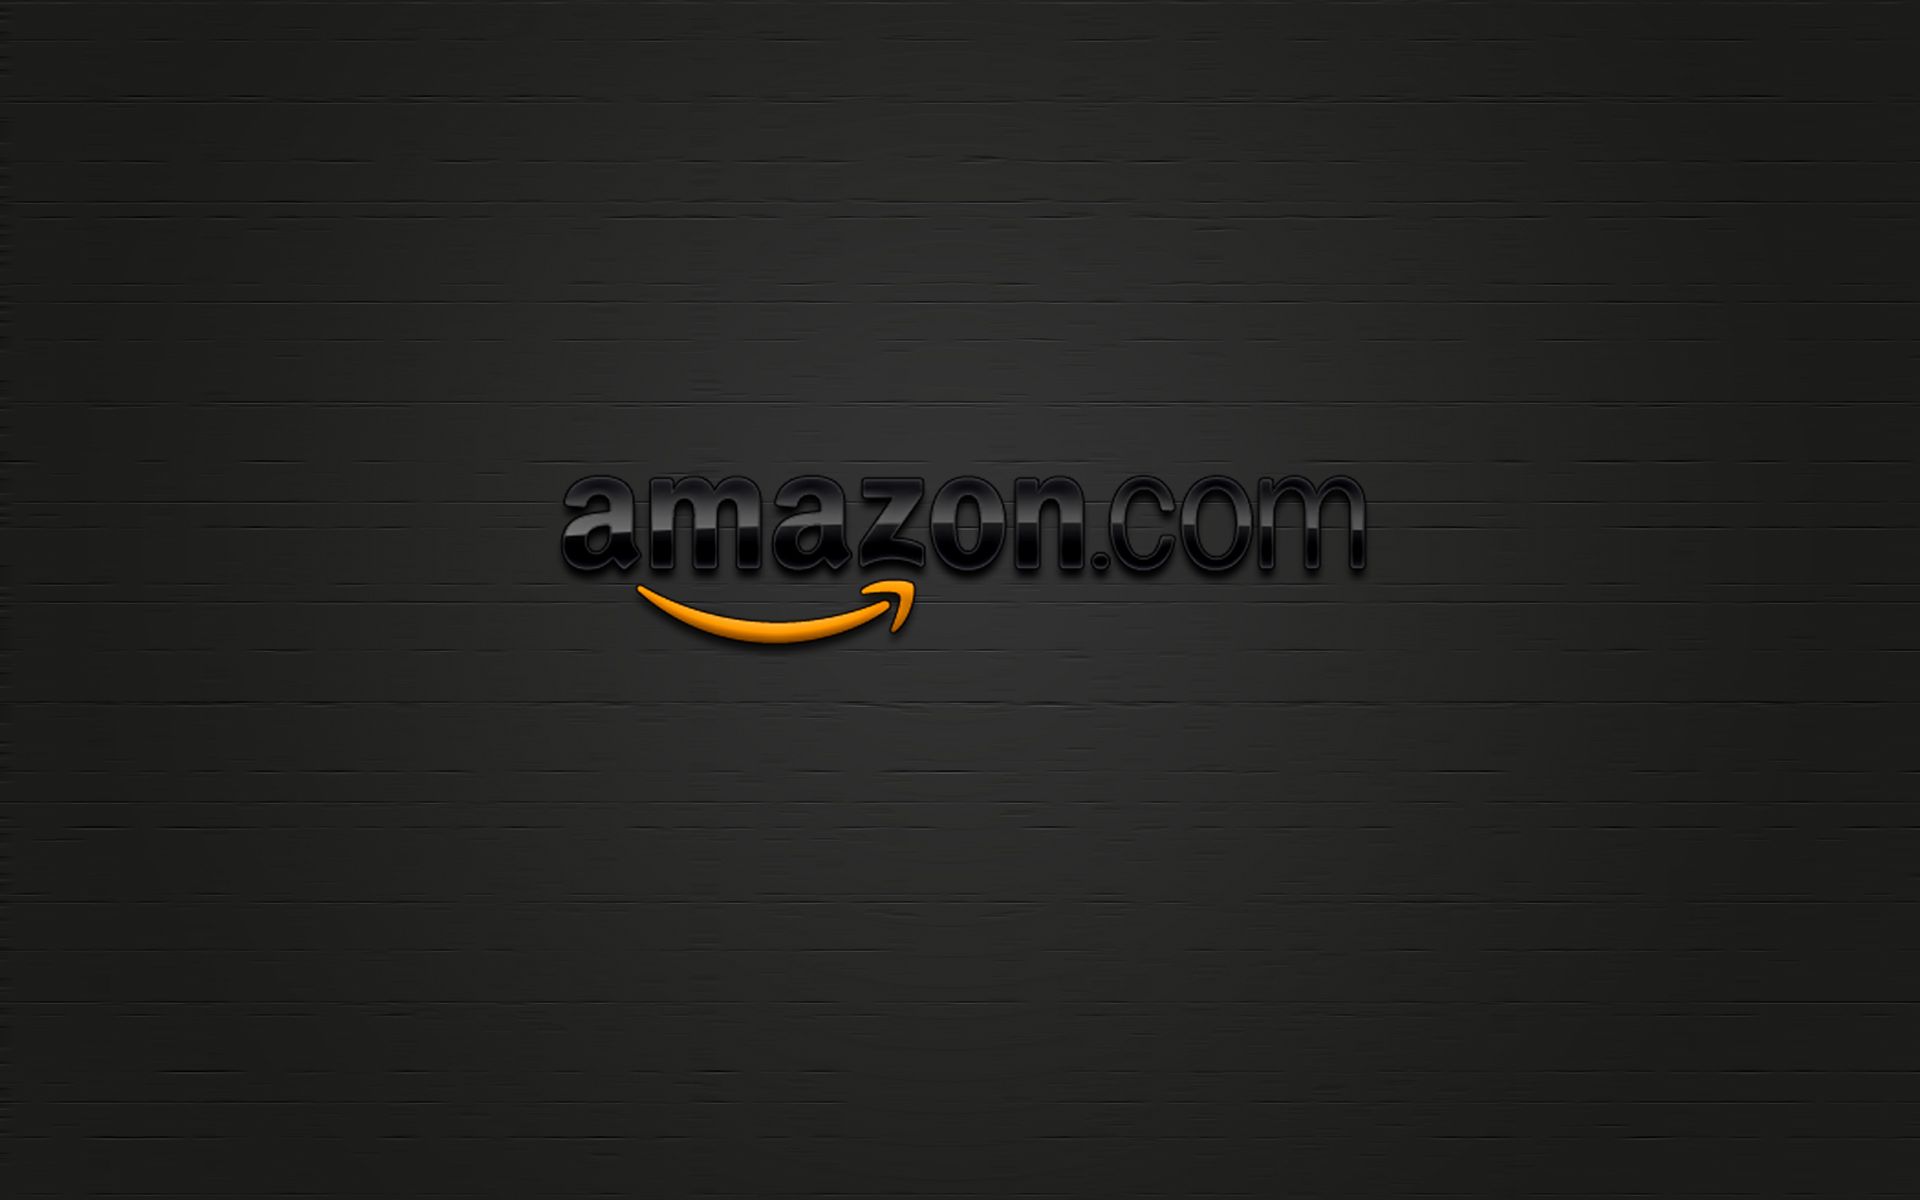 Amazon Logo Wallpapers 4k Hd Amazon Logo Backgrounds On Wallpaperbat